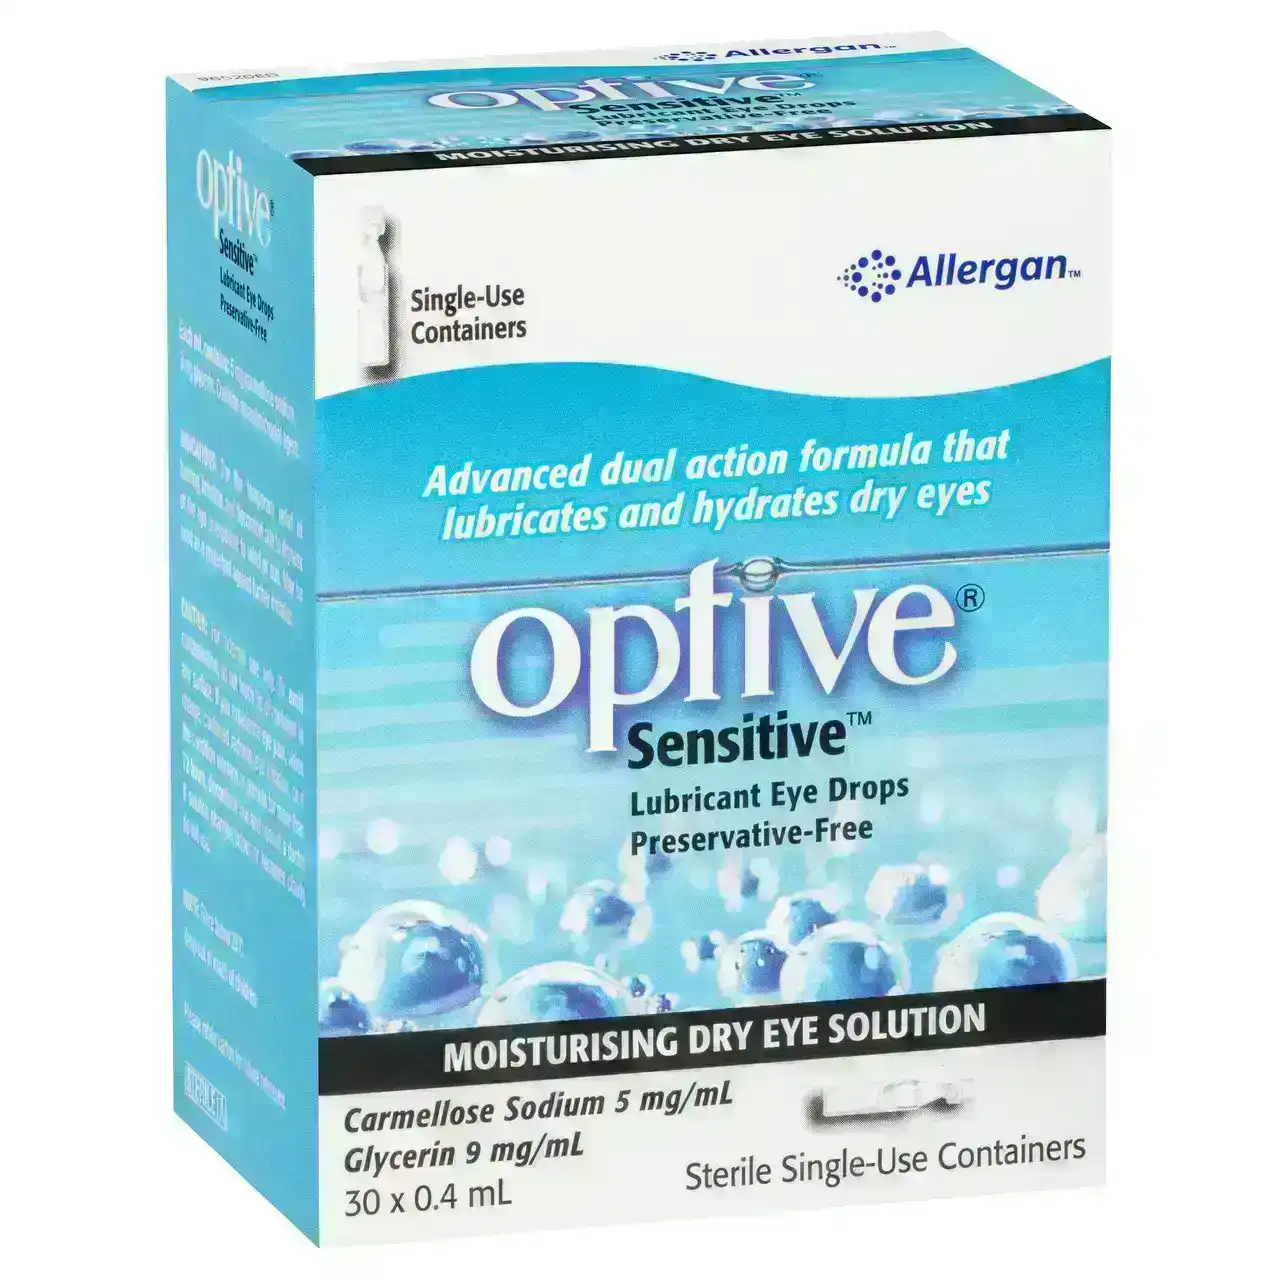 OPTIVE Sensitive Lubricant Eye Drops 30 X 0.4mL